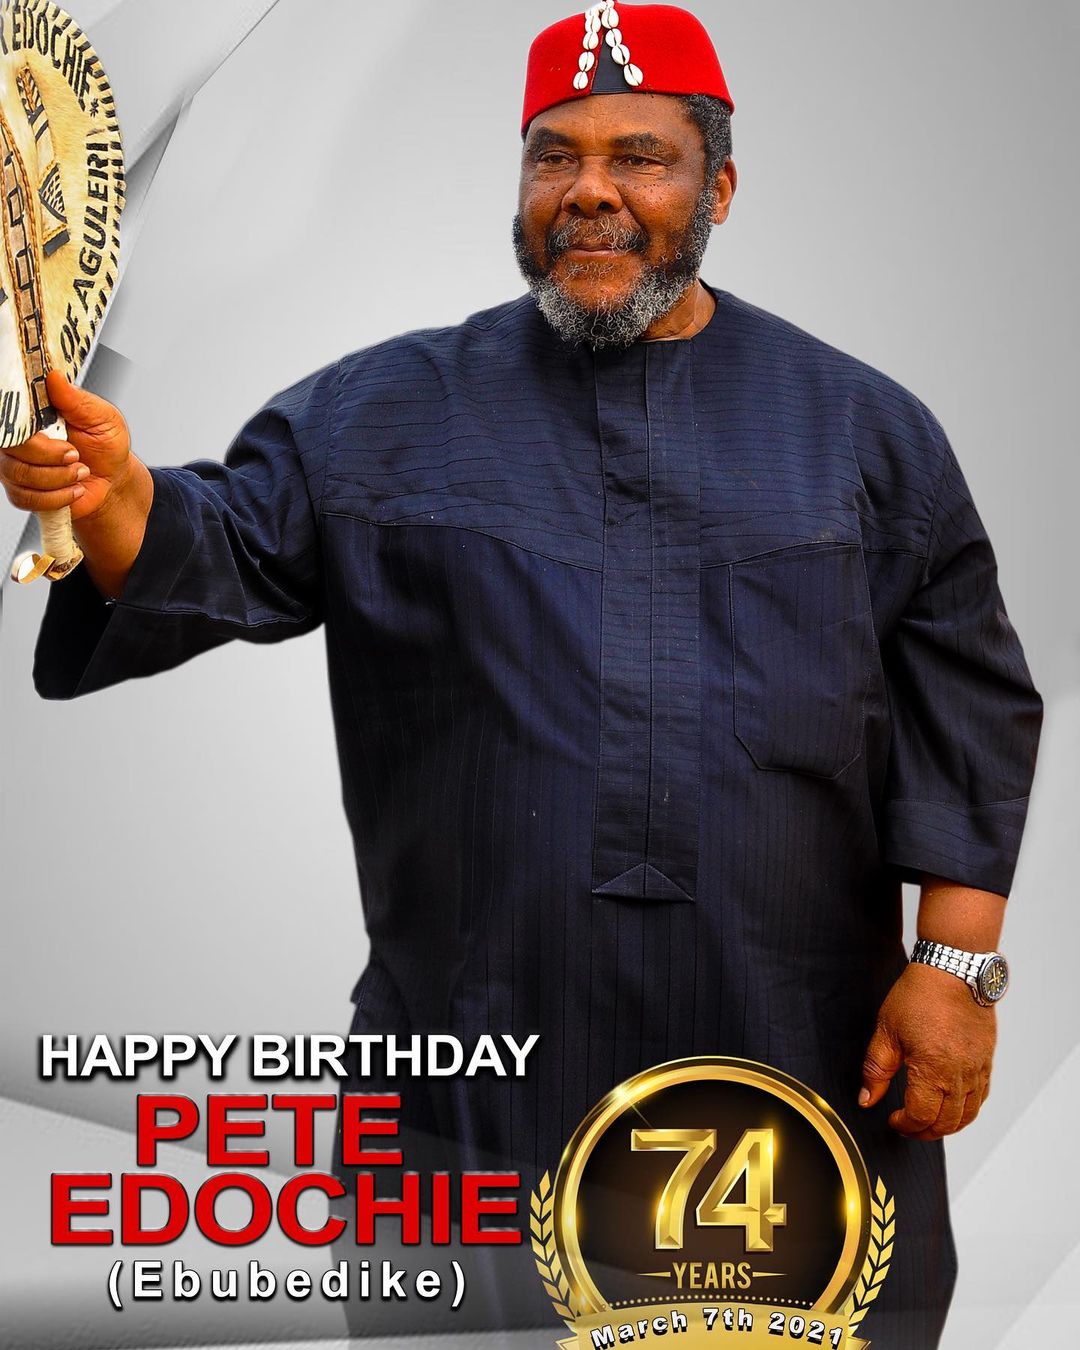 Peteedochie - Pete Edochie Celebrates His 74th Birthday Today (photos) 13230549_peteedochie202103071_jpegd2d80a354fe91323fe551da2b6f66c94